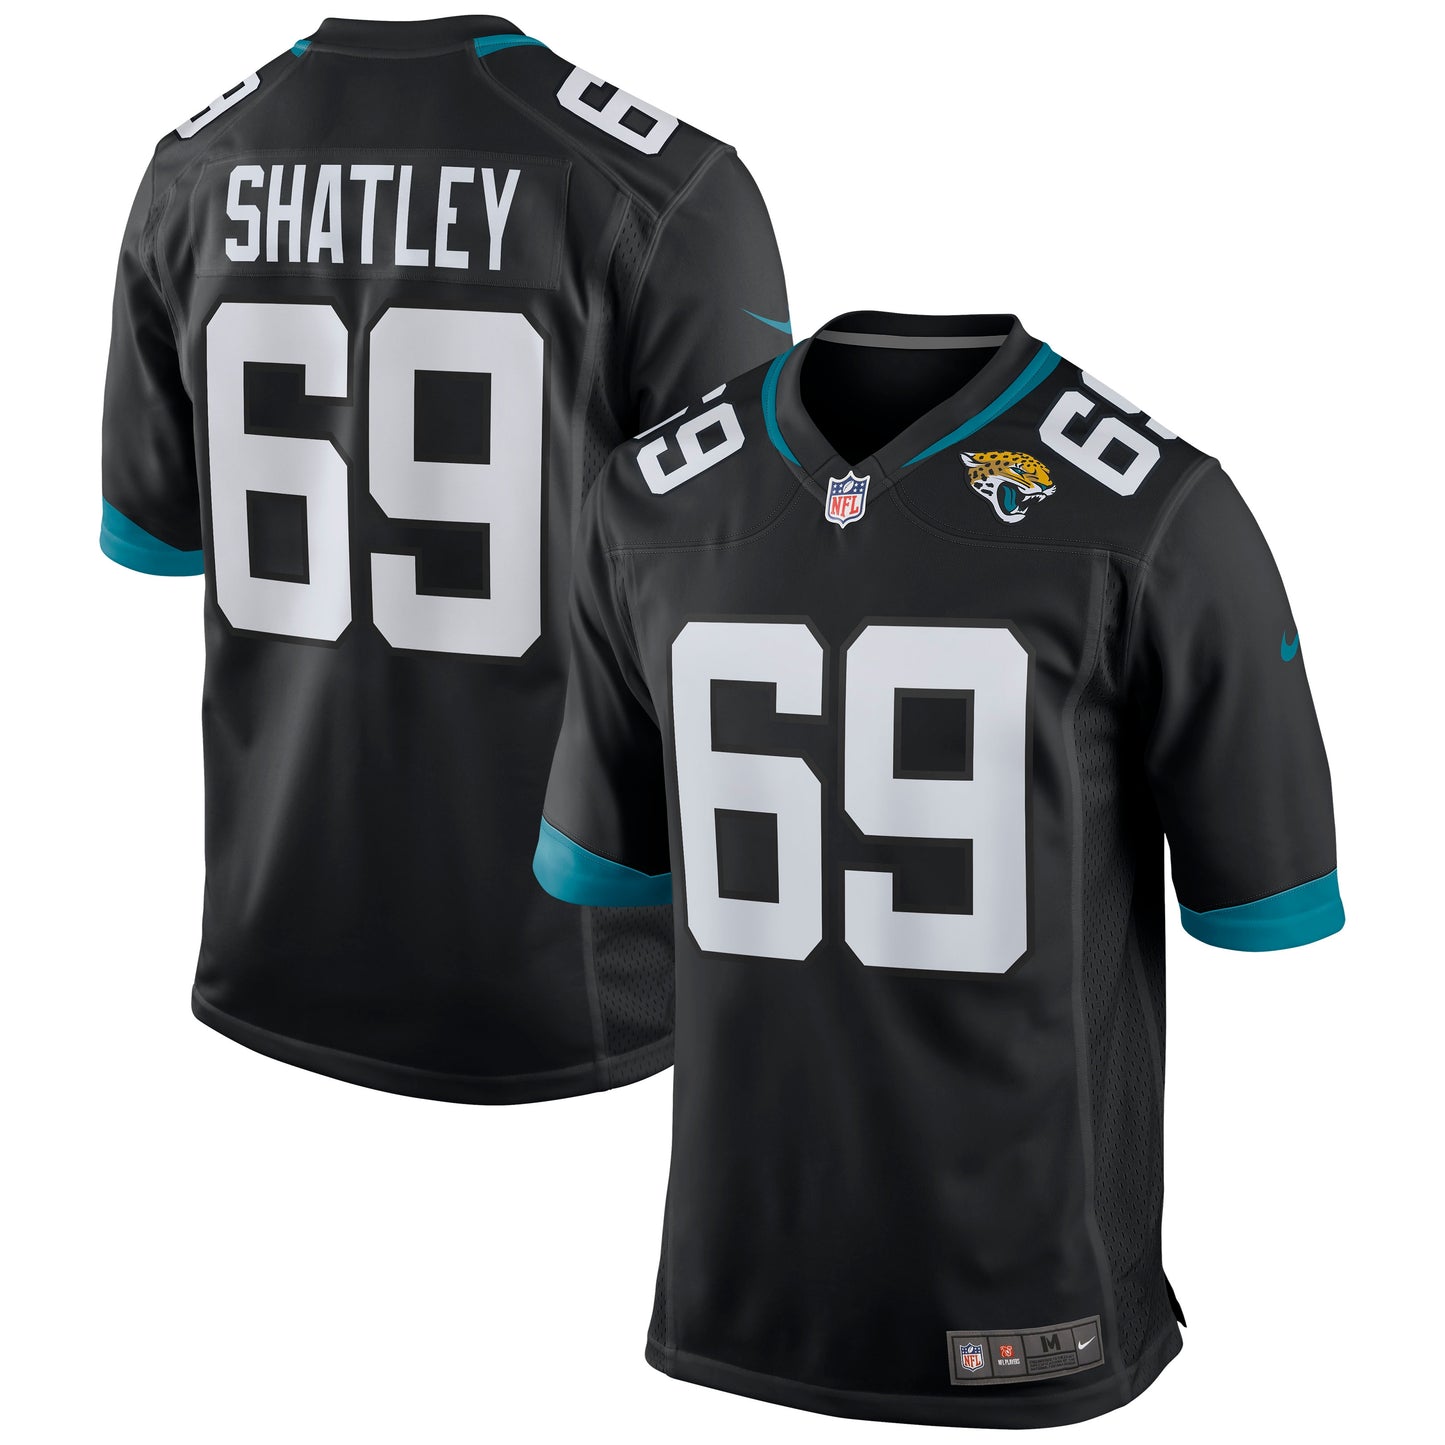 Tyler Shatley Jacksonville Jaguars Nike Game Jersey - Black